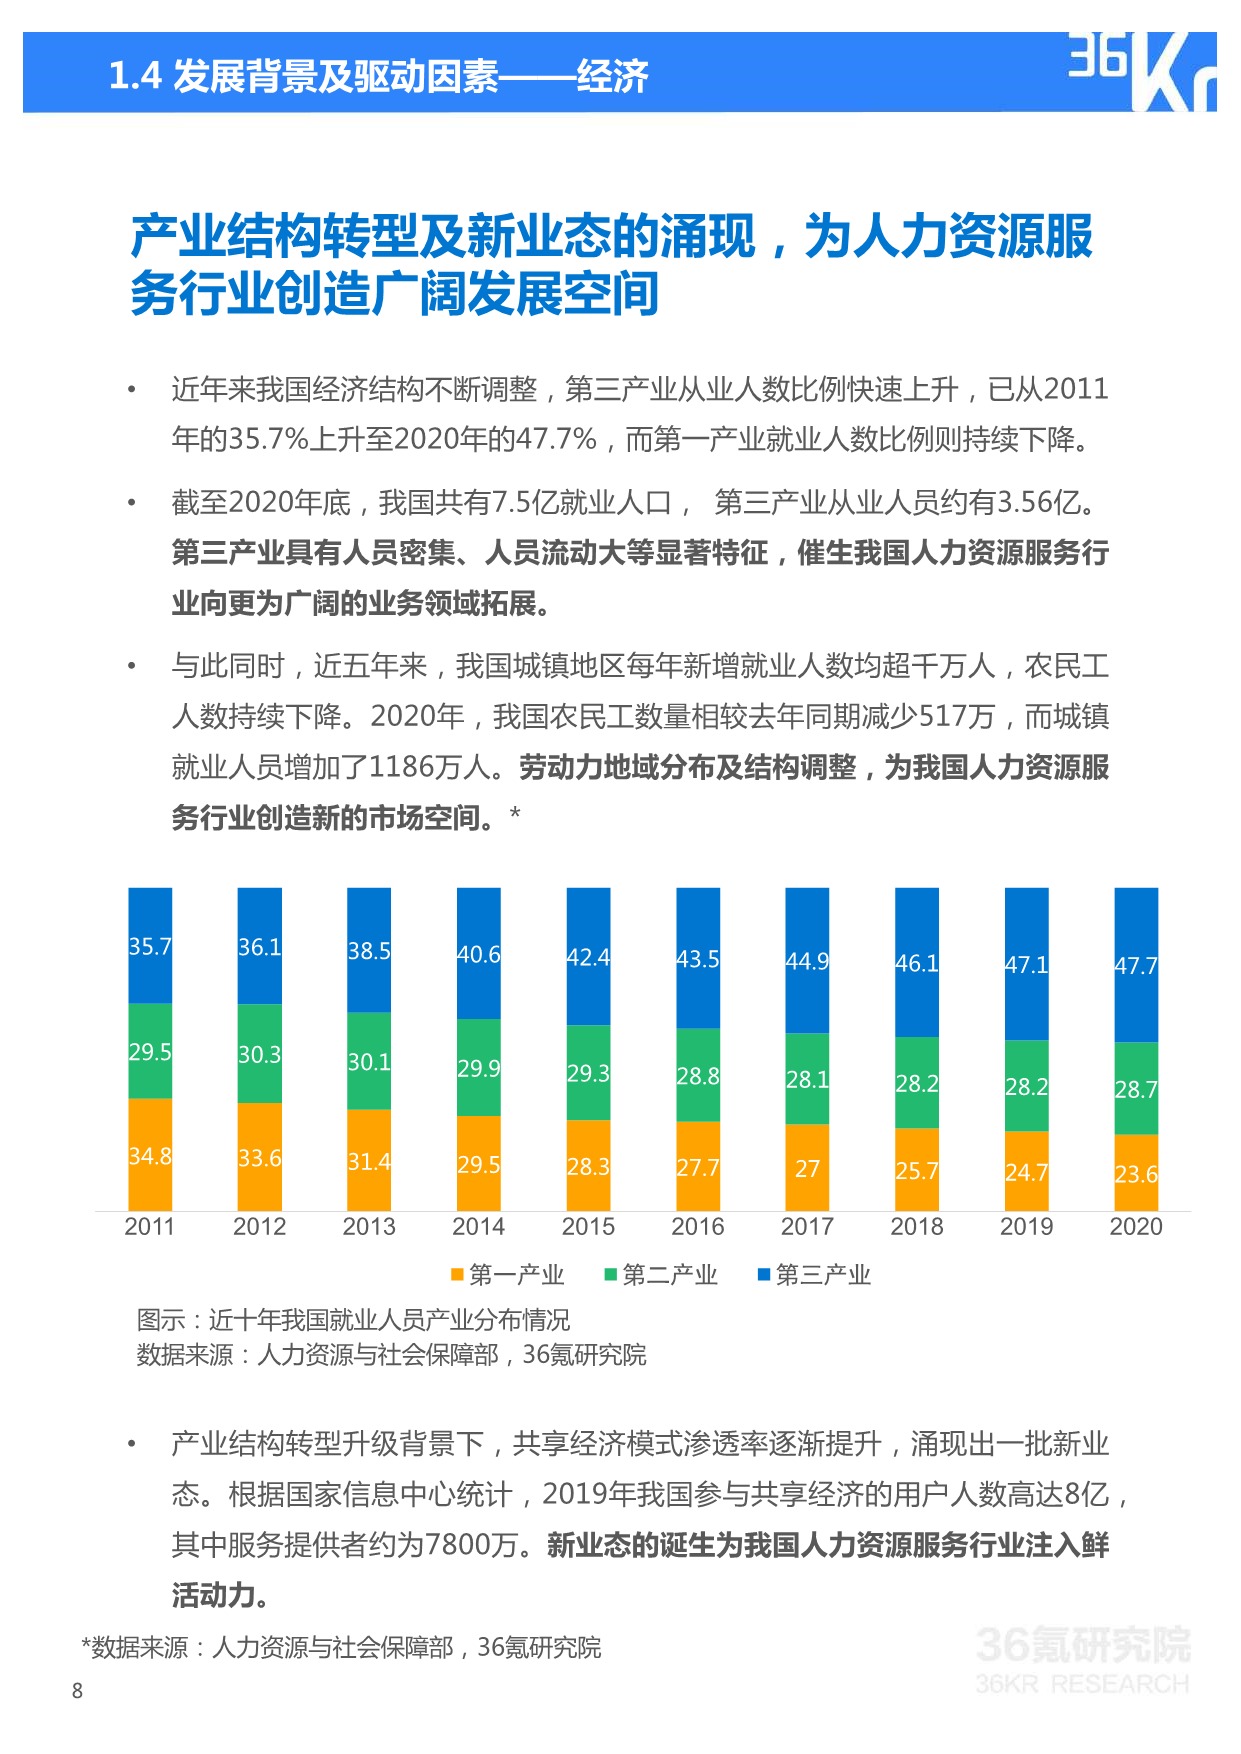 36Kr-2021年中国人力资源服务行业研究报告_8.jpeg